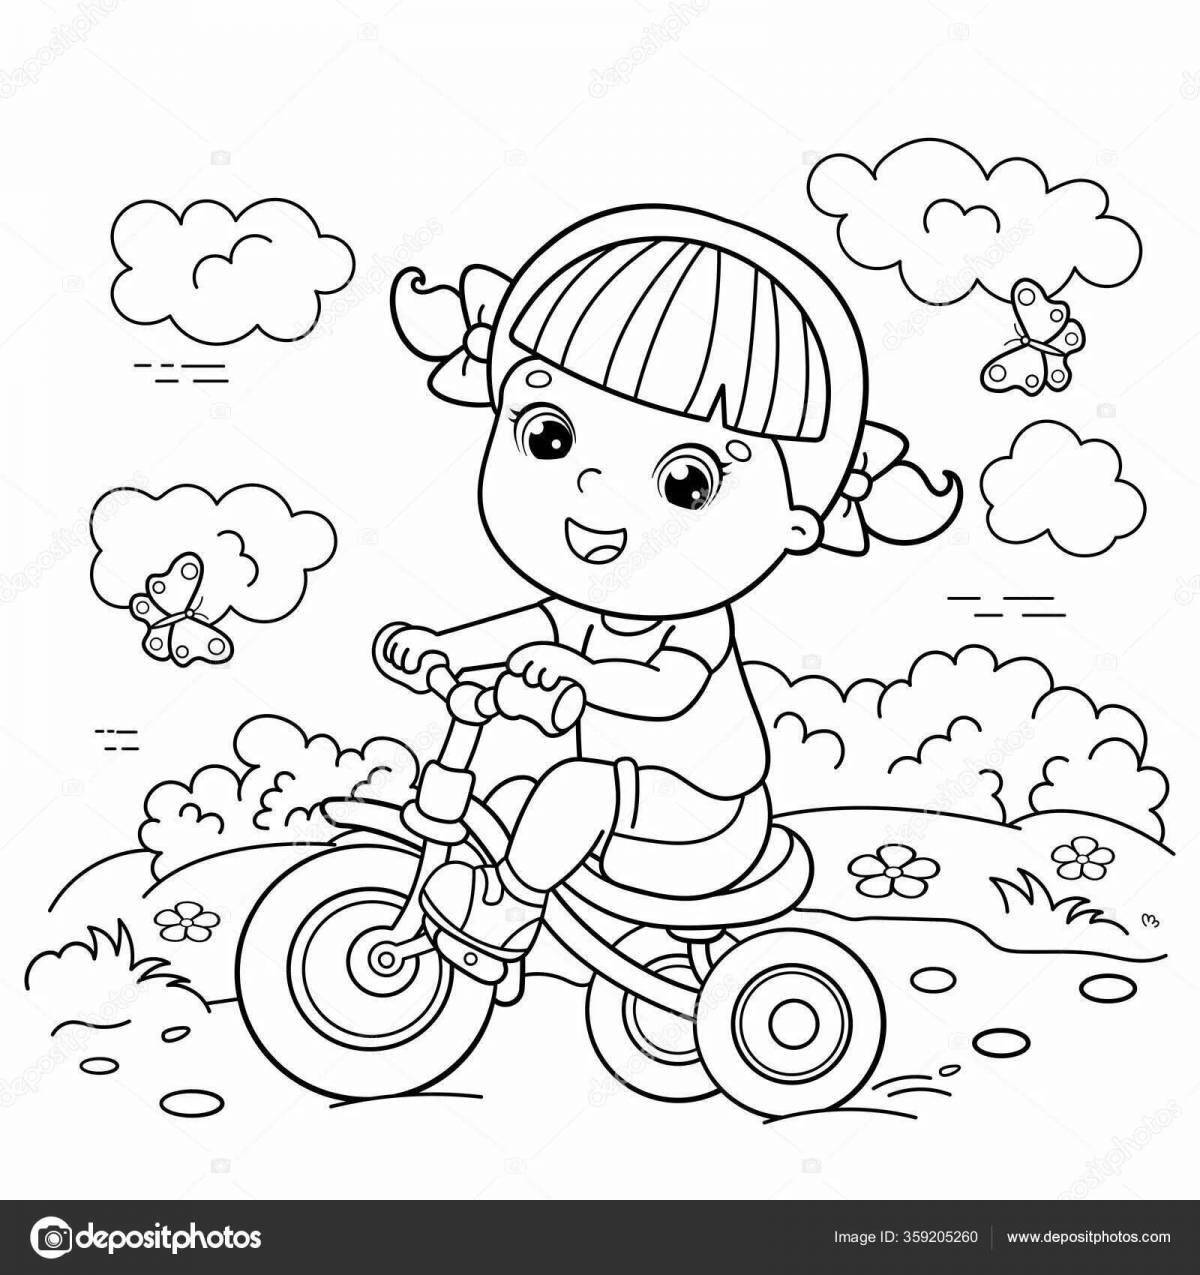 Colorful girl on a bike